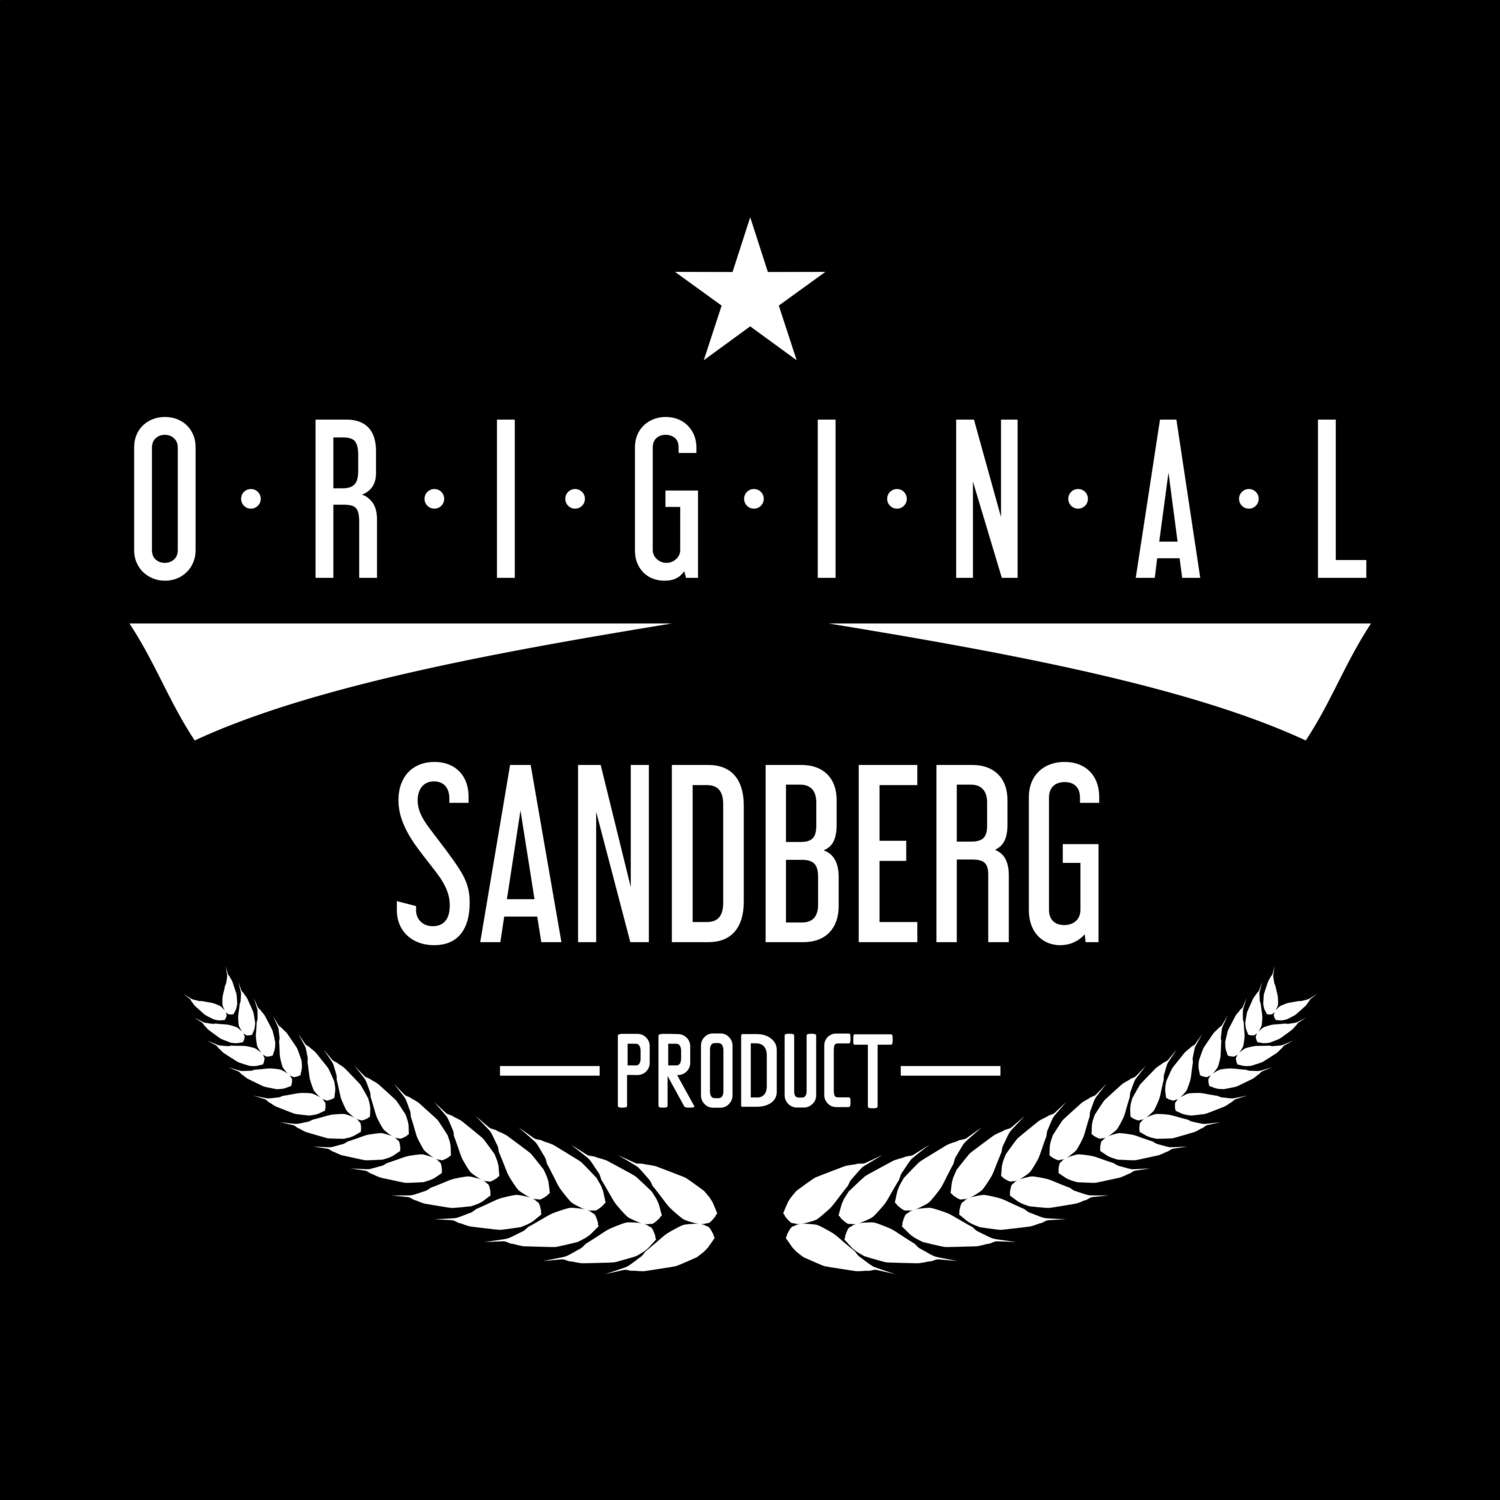 Sandberg T-Shirt »Original Product«